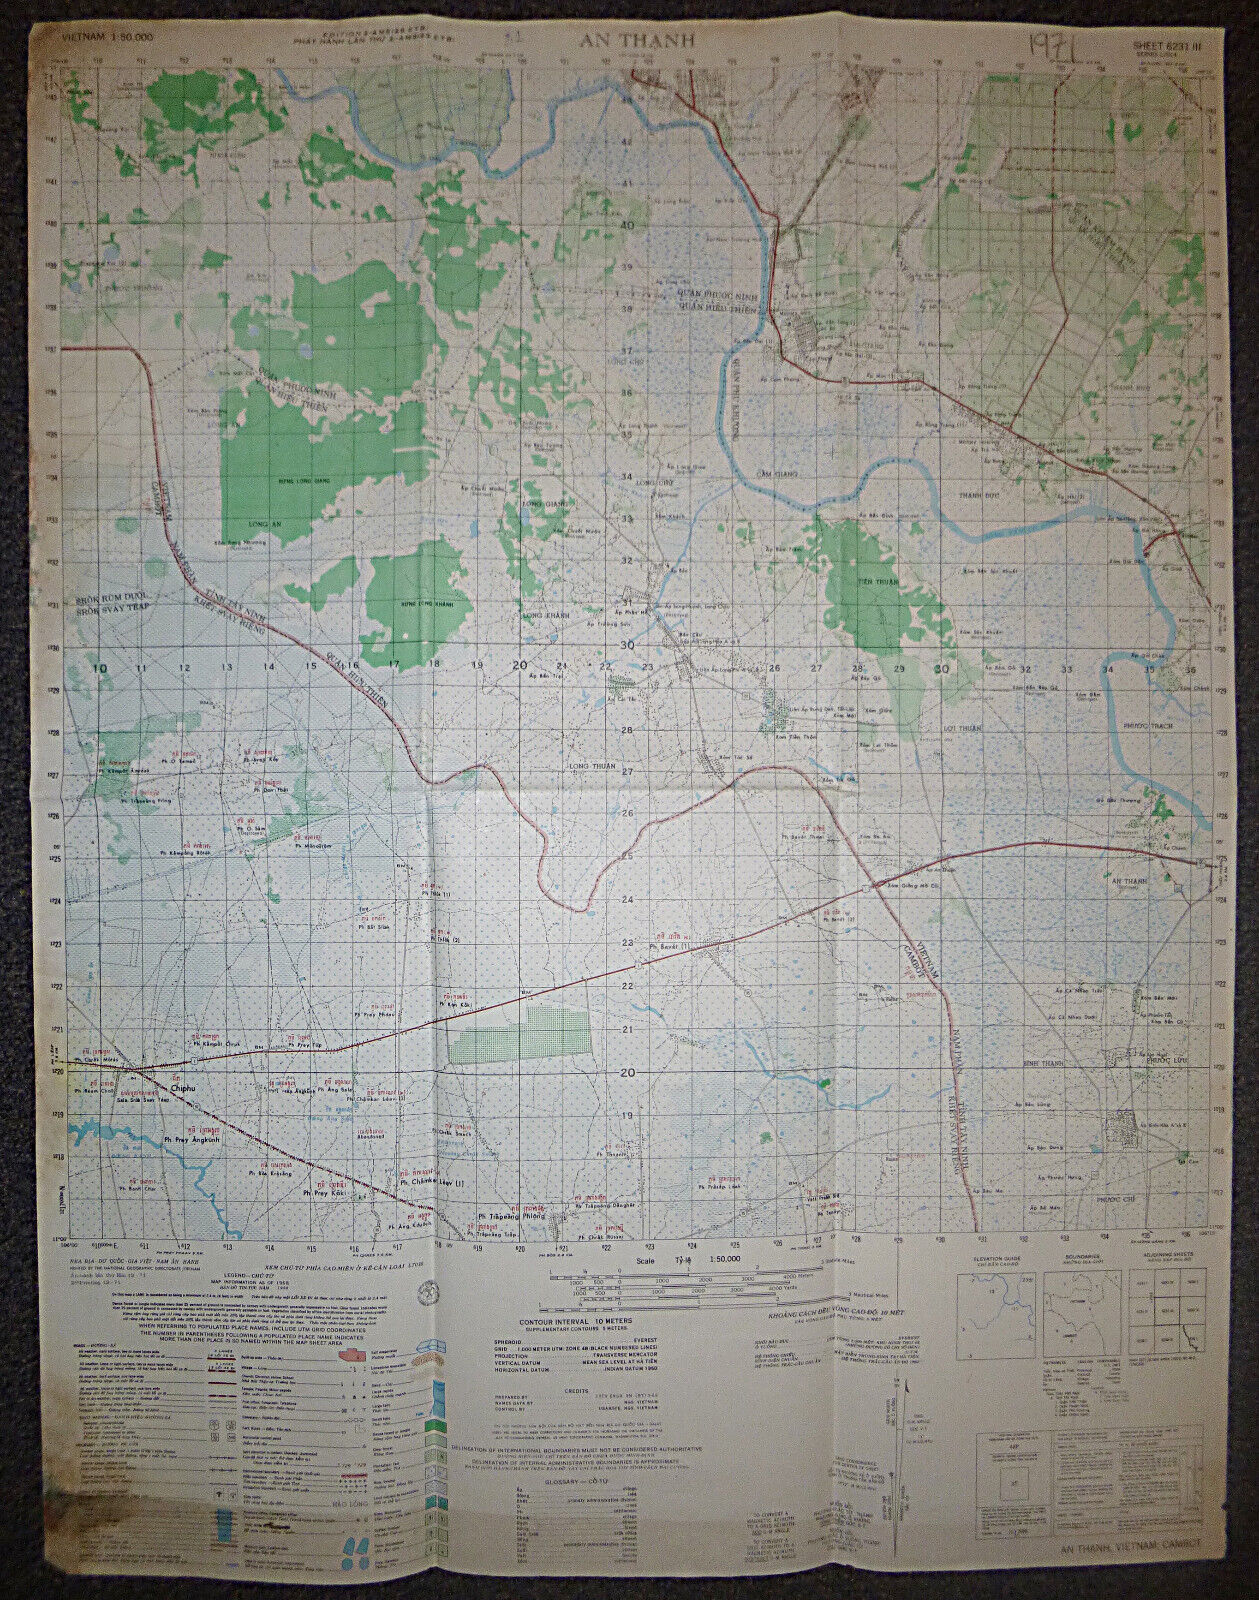 6231 iii - AN THANH, Map - HCM Trail 1971 - Chiphu, Cambodia Border, Vietnam War